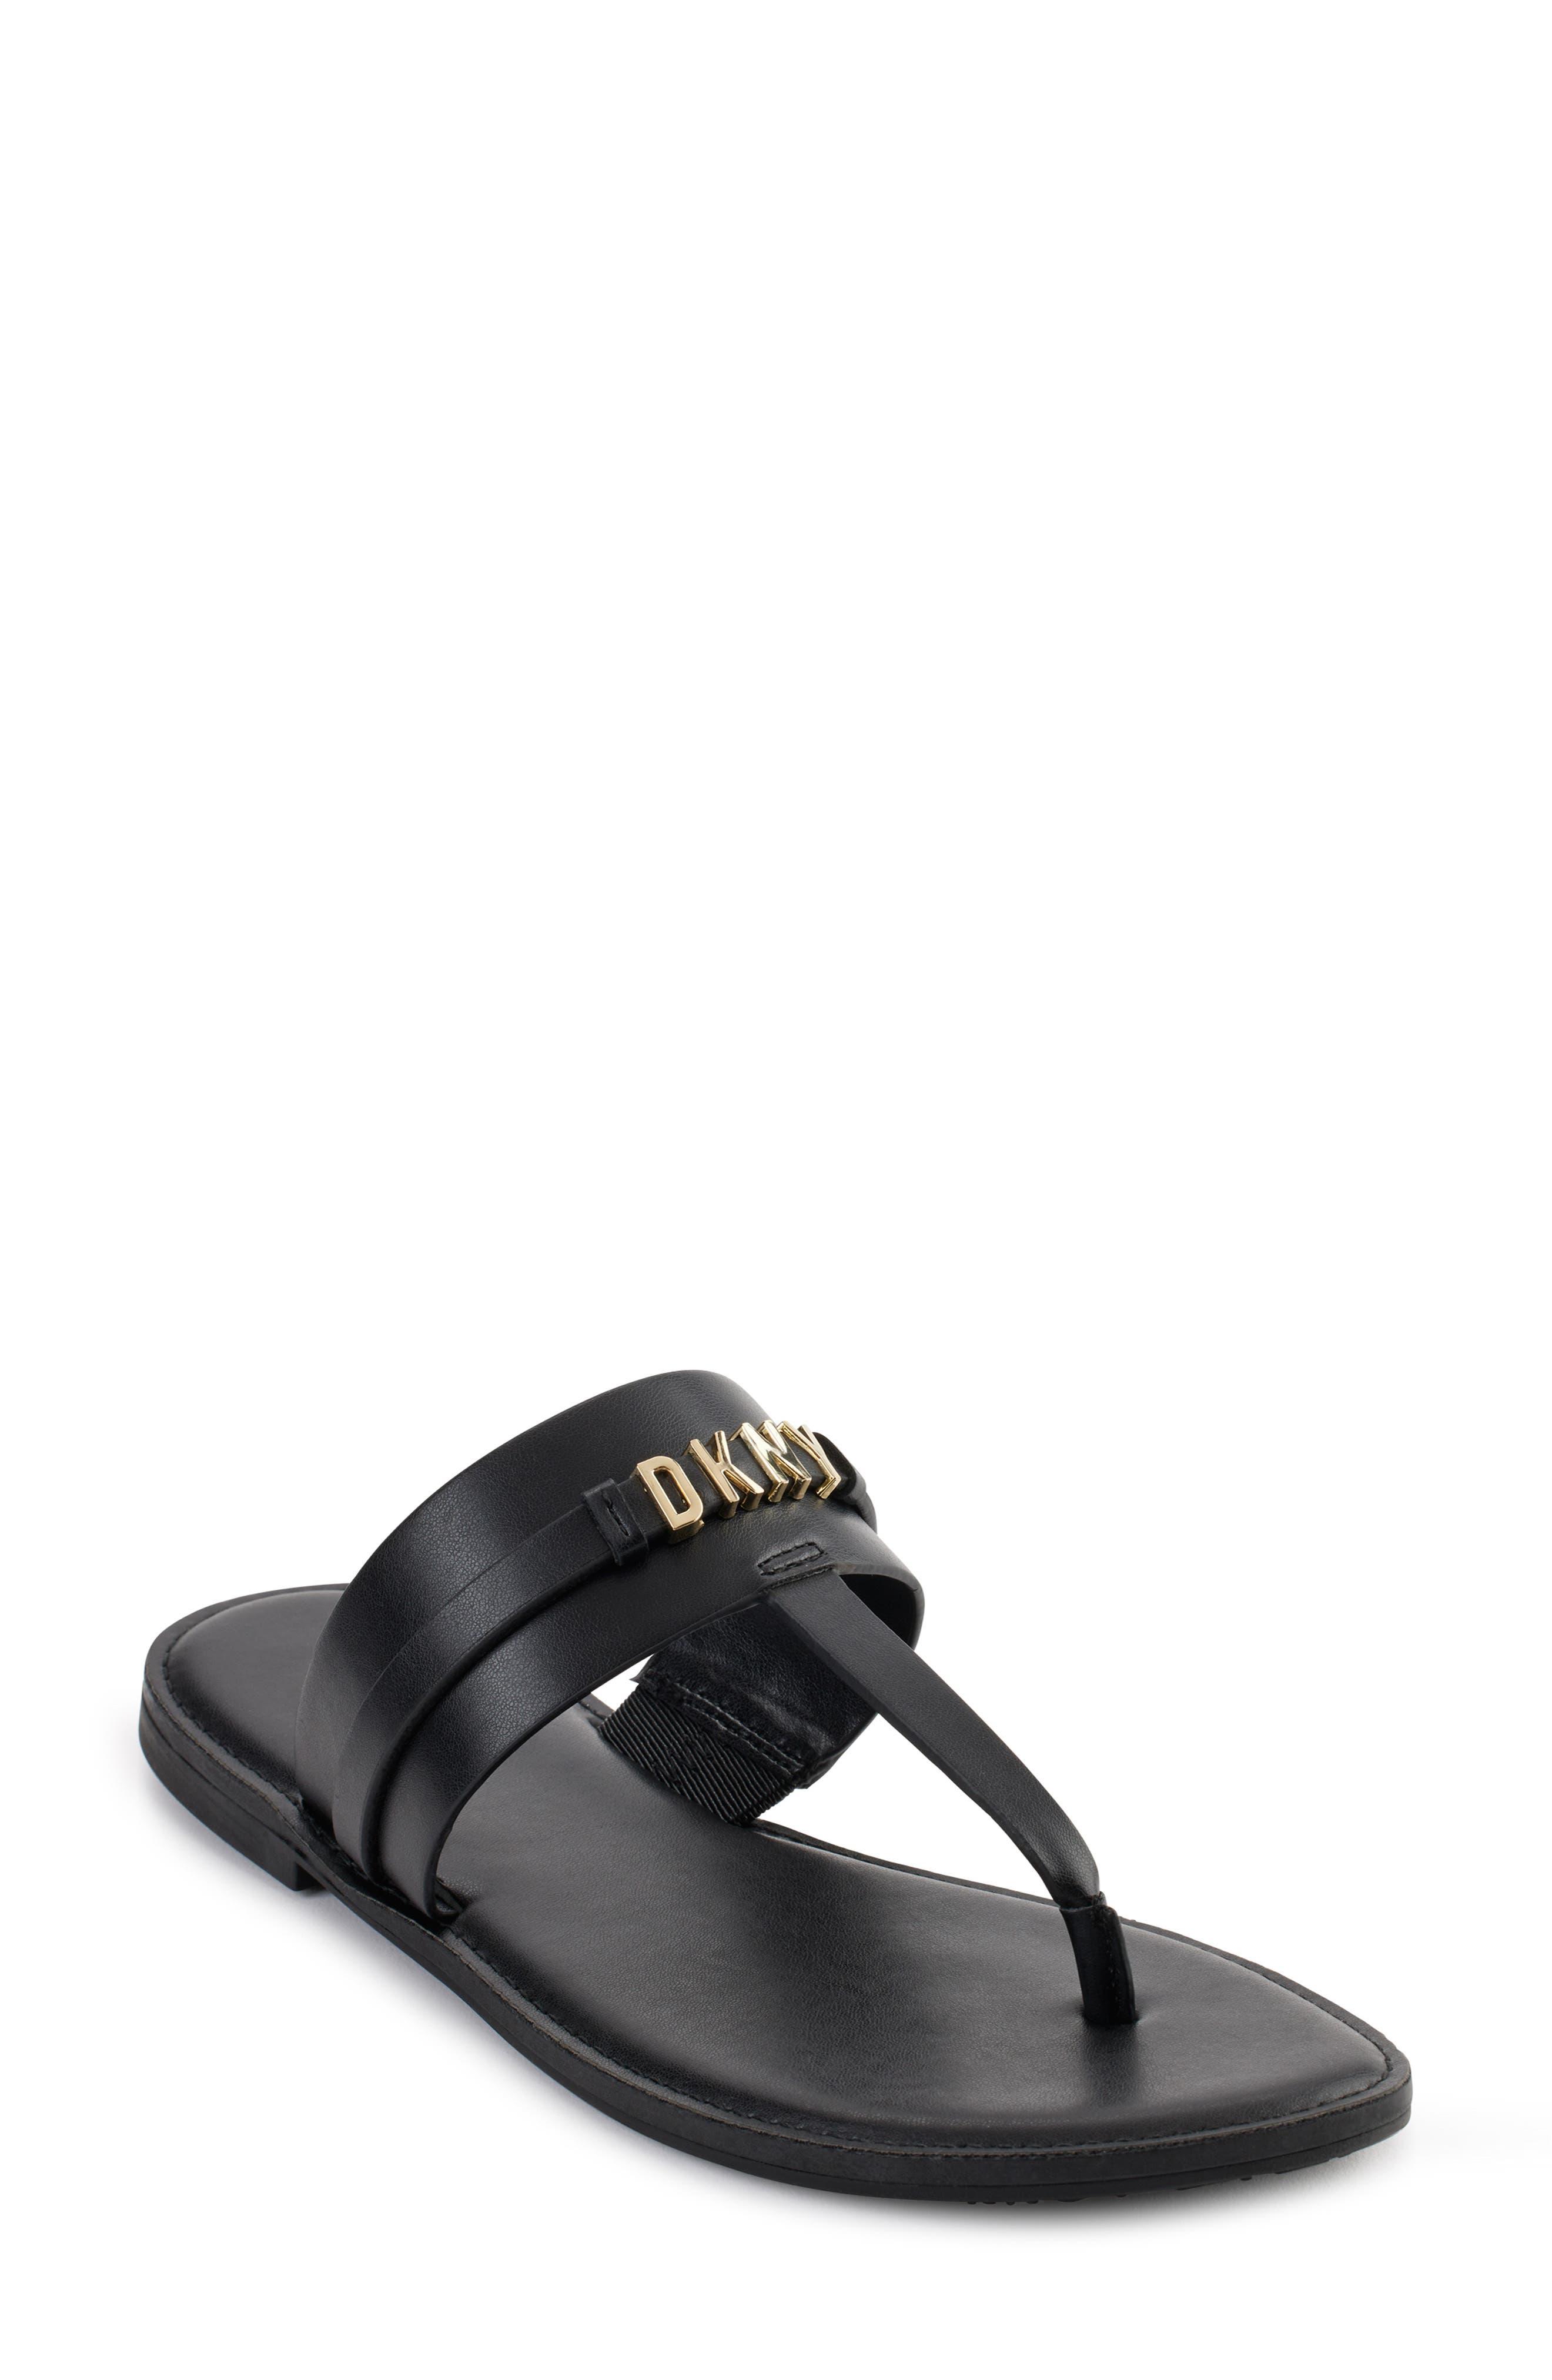 DKNY Sania Thong Sandal in Black | Lyst